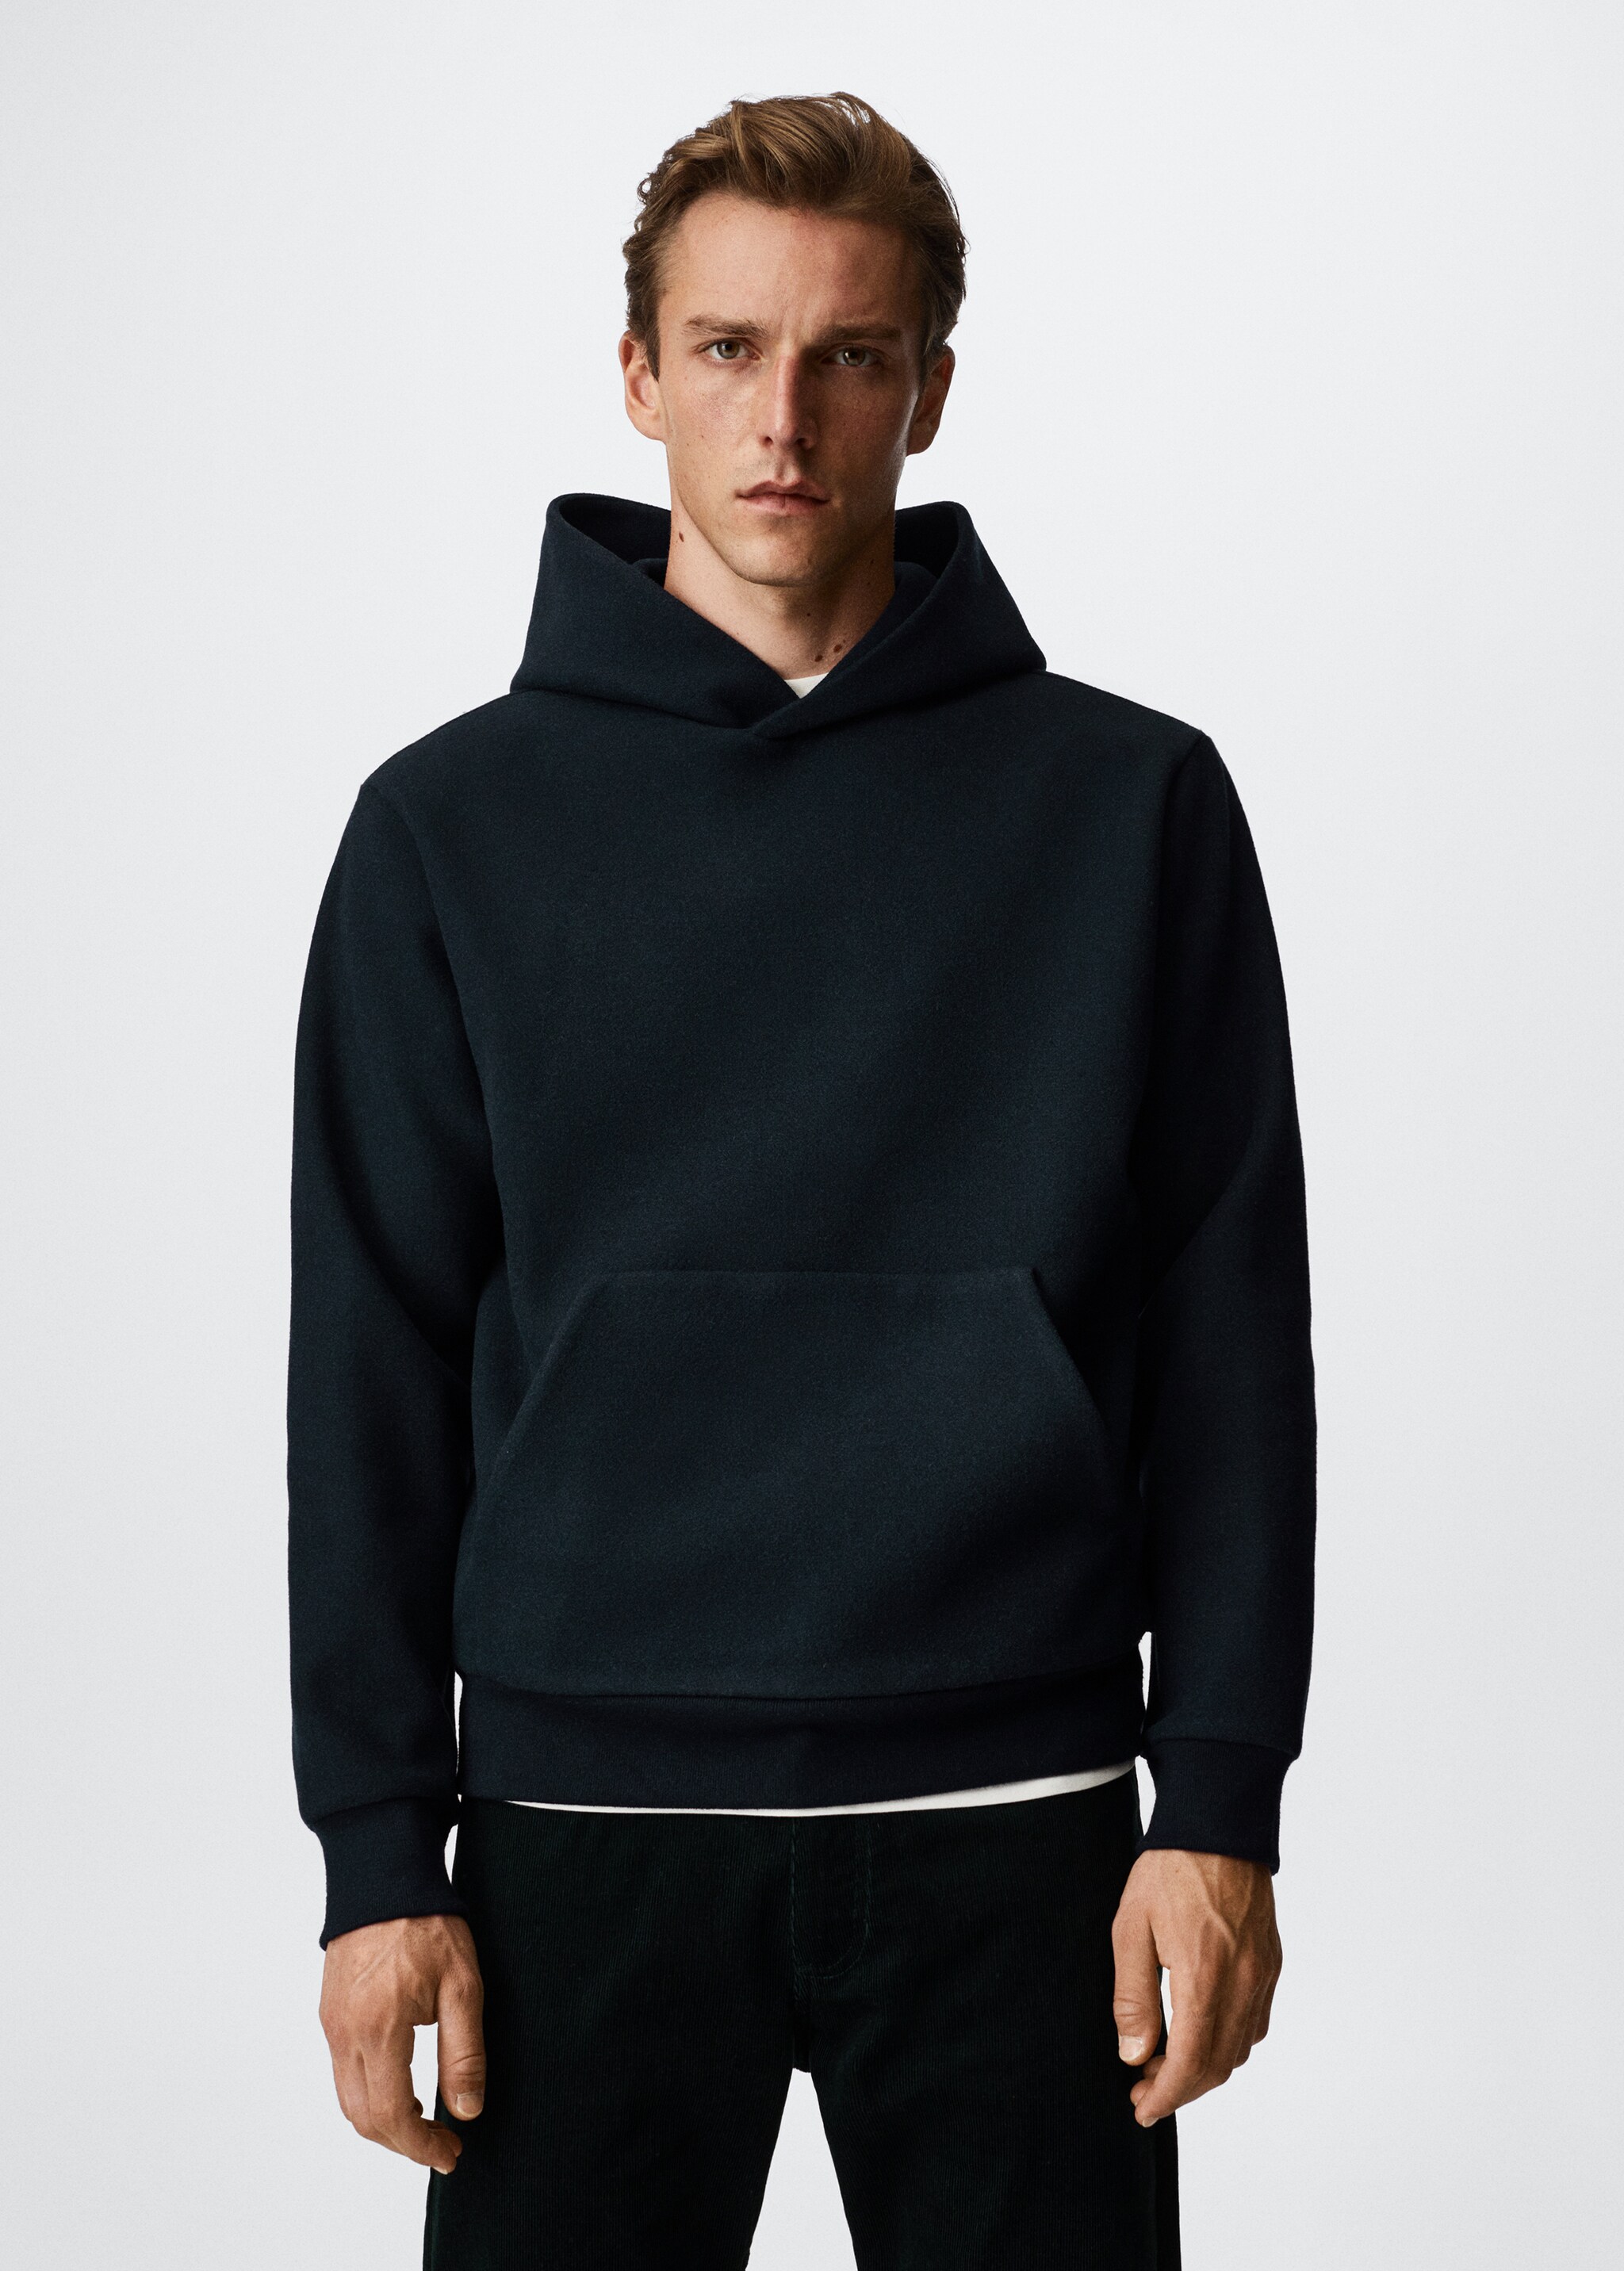 Textured hooded sweatshirt - Medium plane